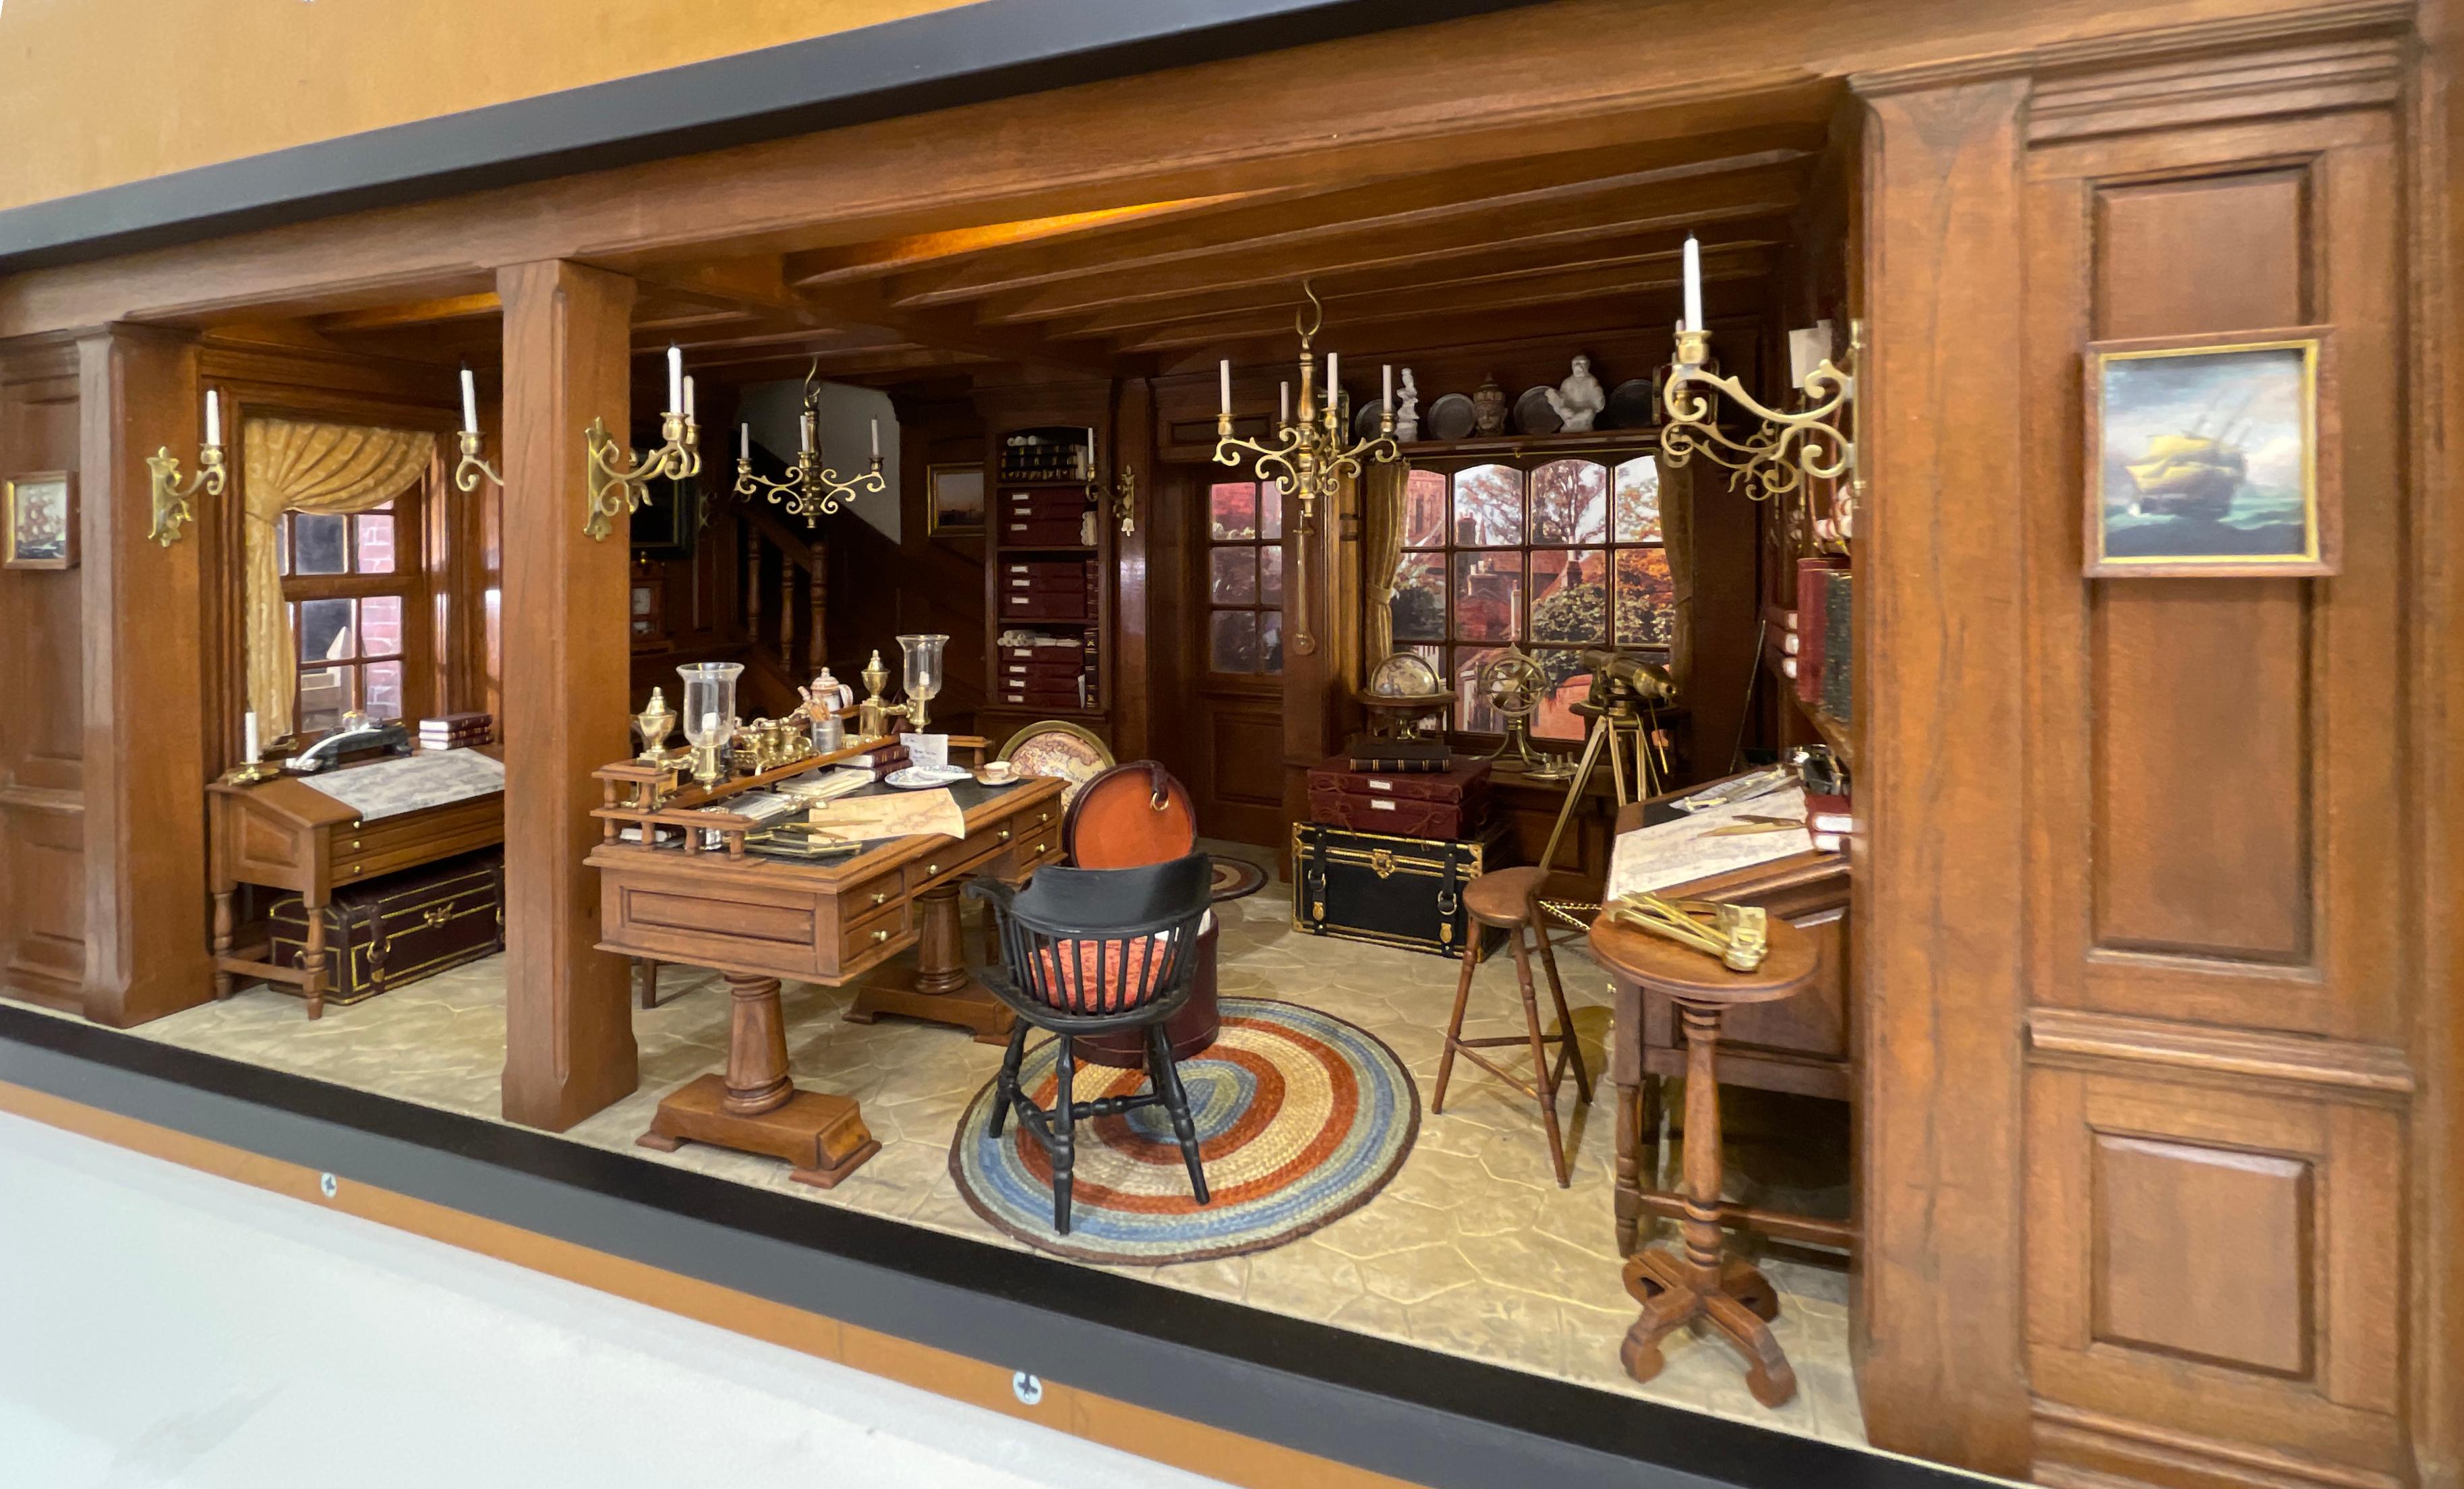 Büro eines Neuengland-Kartografen aus dem 18. Jahrhundert - Kupjack Studios Miniature Room im Angebot 7